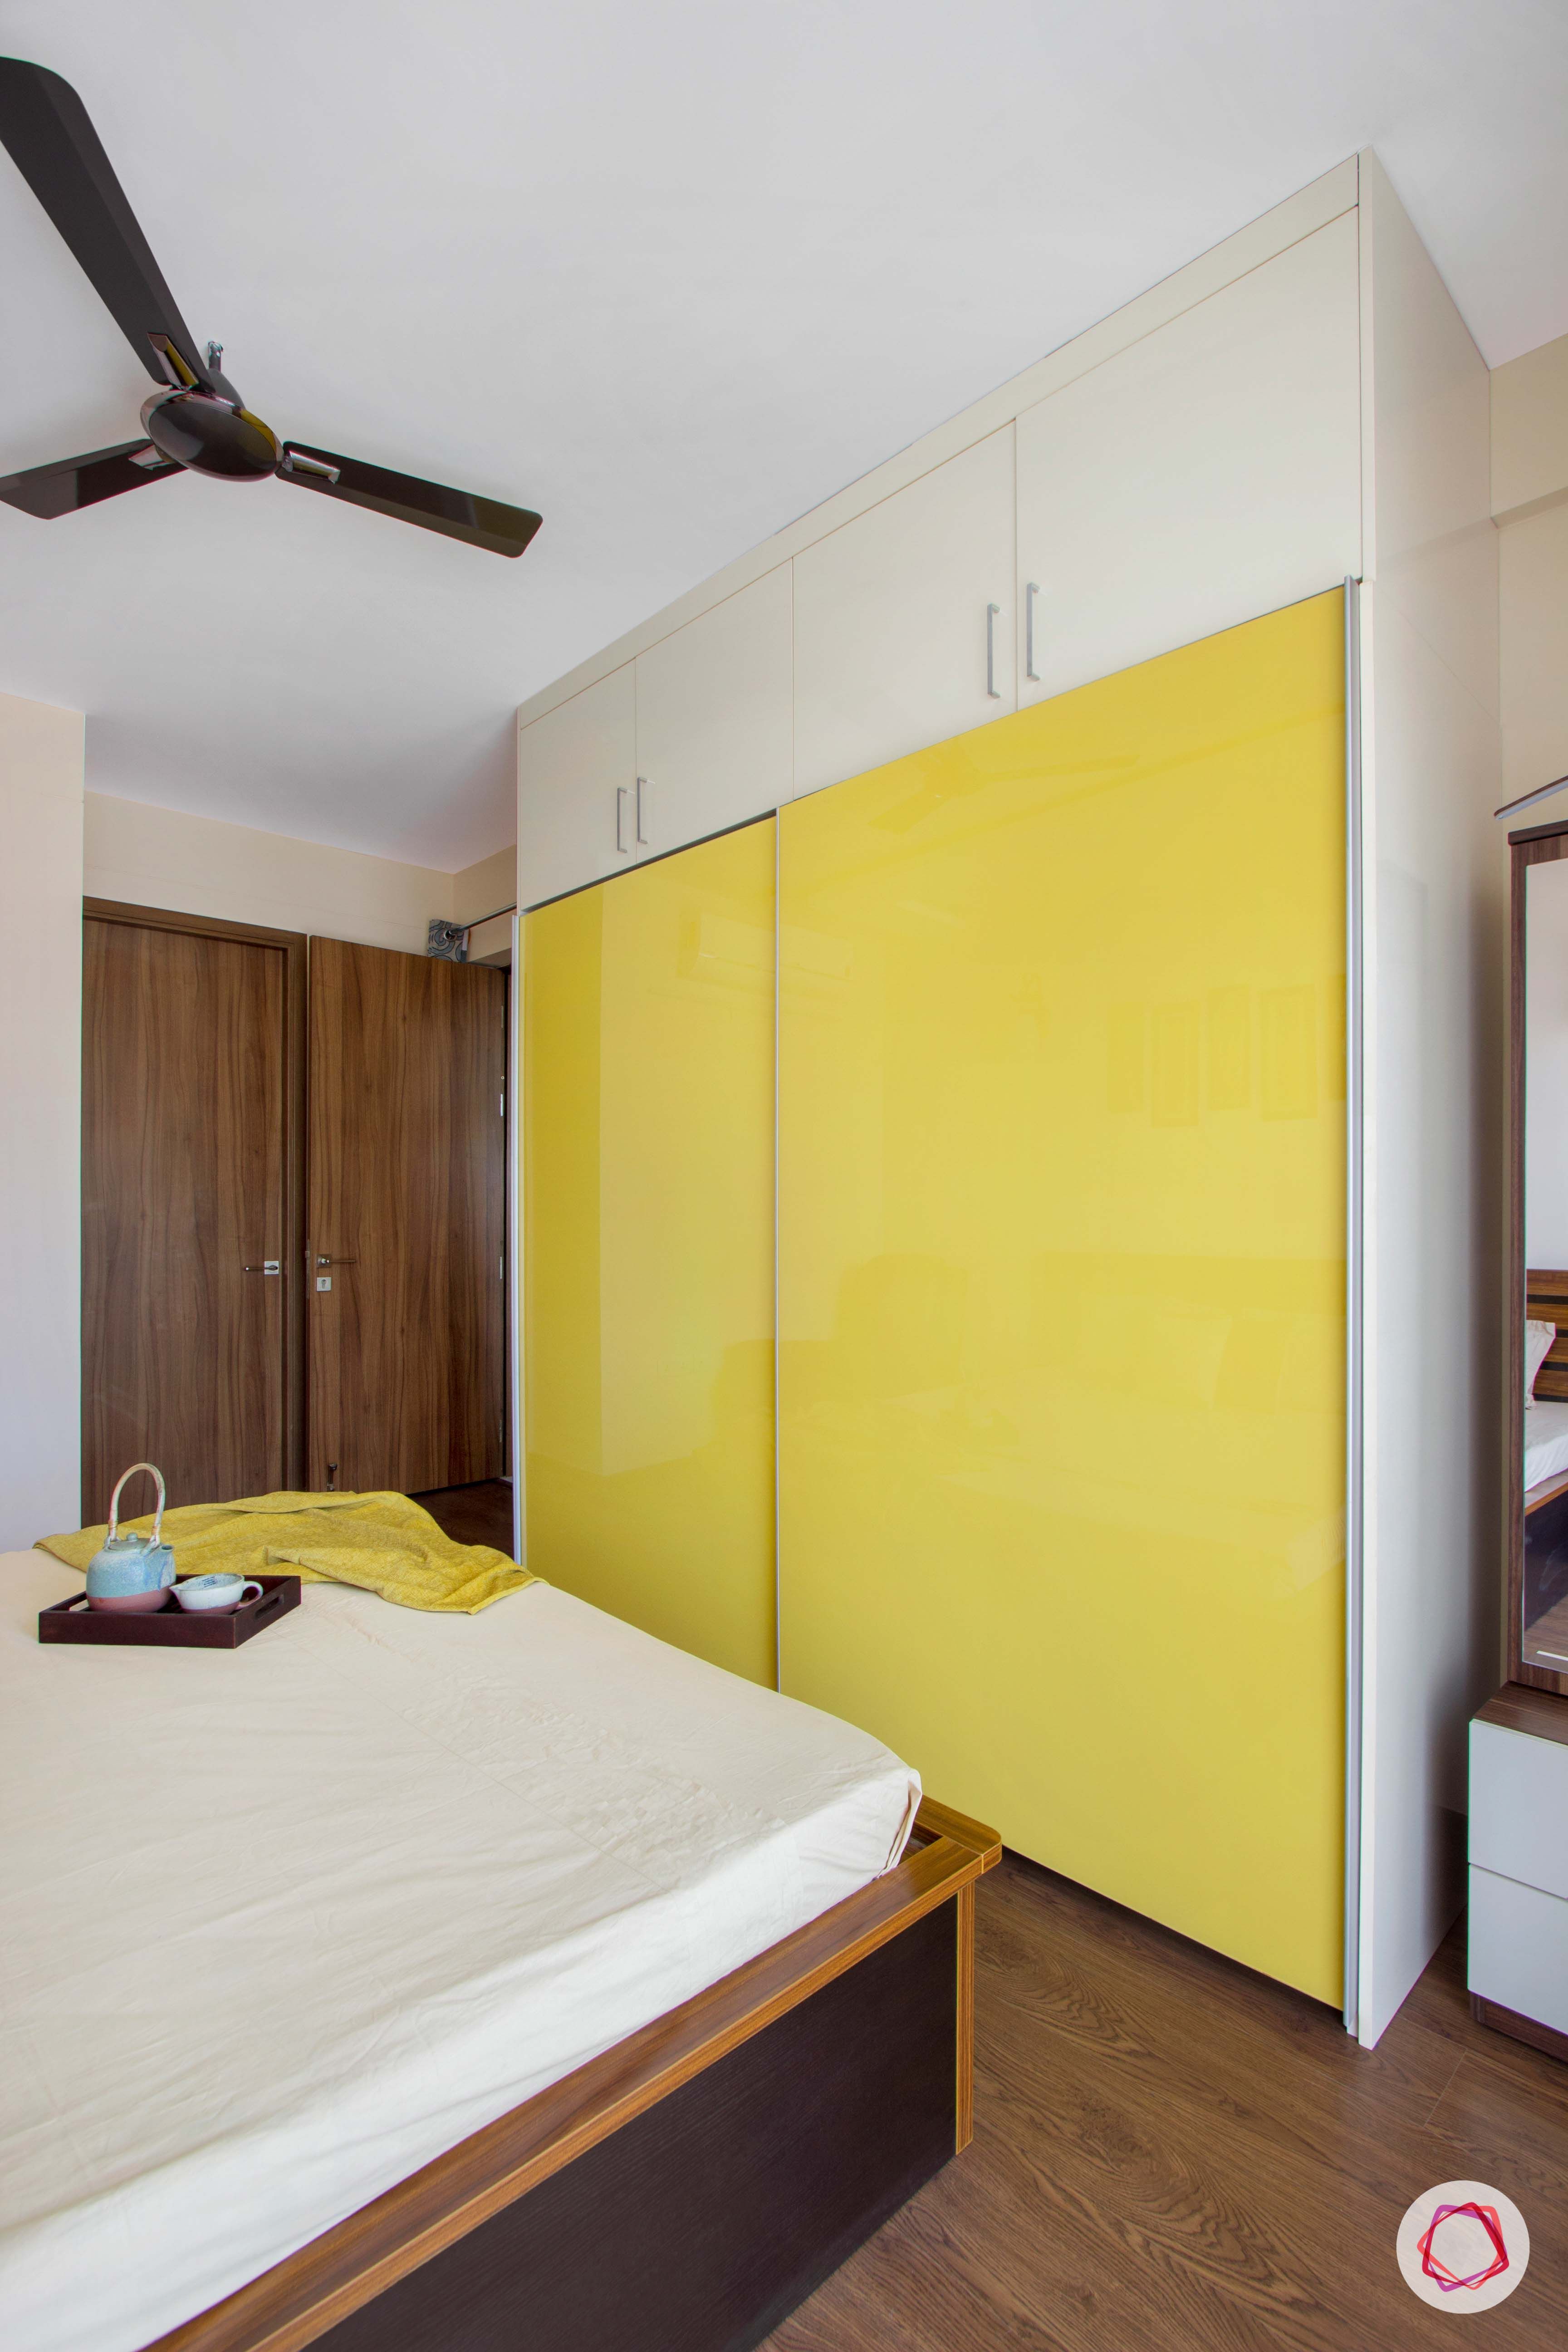 snn raj greenbay-master bedroom-yellow wardrobe-sliding wardrobe-lacquered glass shutter